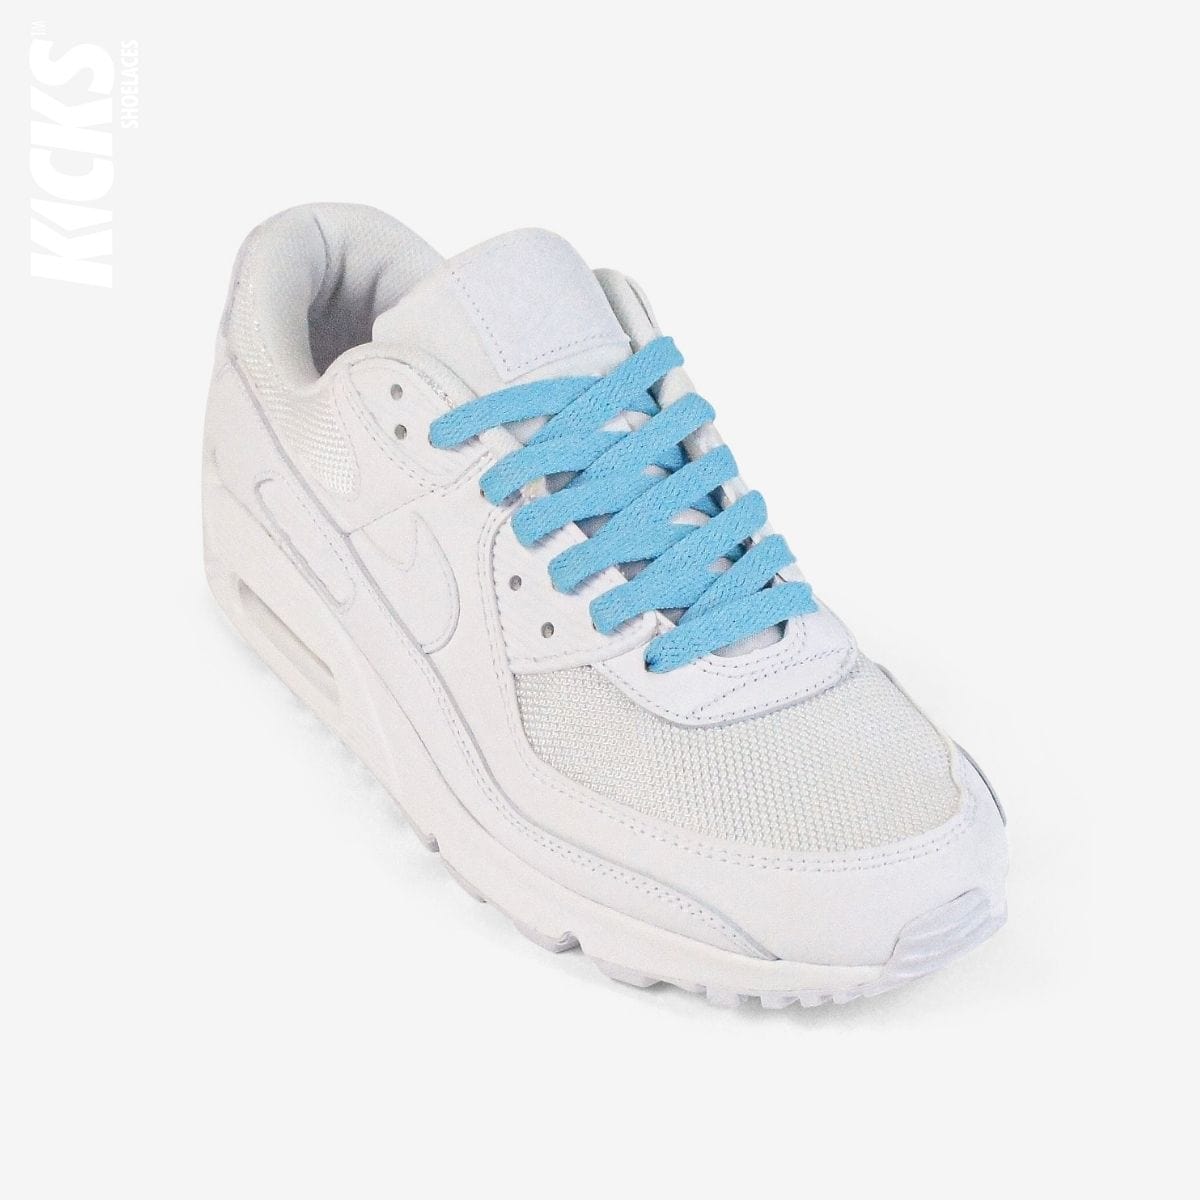 novelty-shoelaces-on-white-sneaker-using-kids-pastel-blue-flat-shoelaces